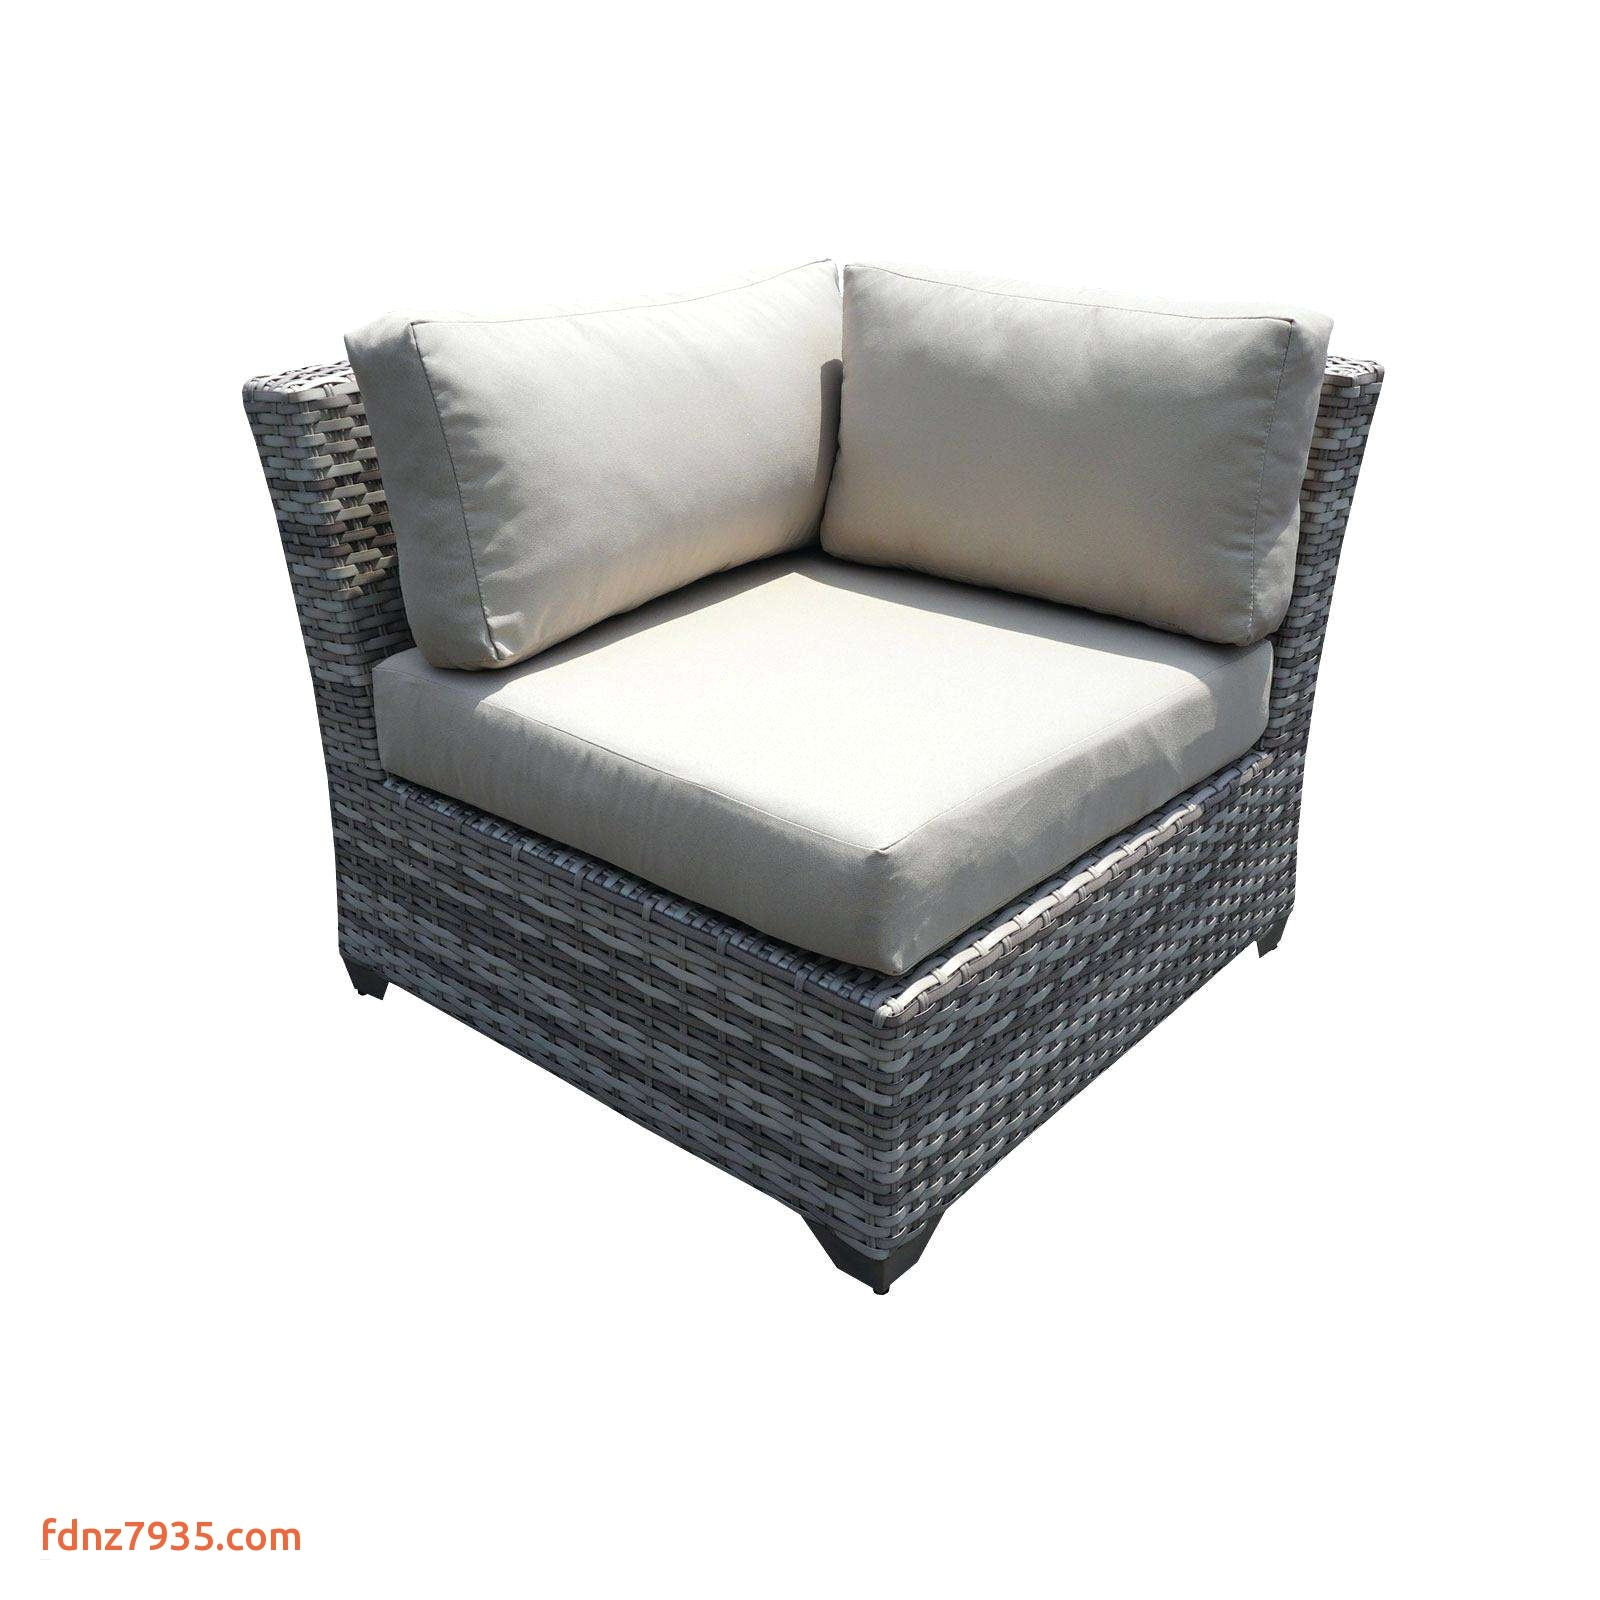 walmart patio cushions replacements luxury patio furniture cushions walmart nice wicker outdoor sofa 0d patio